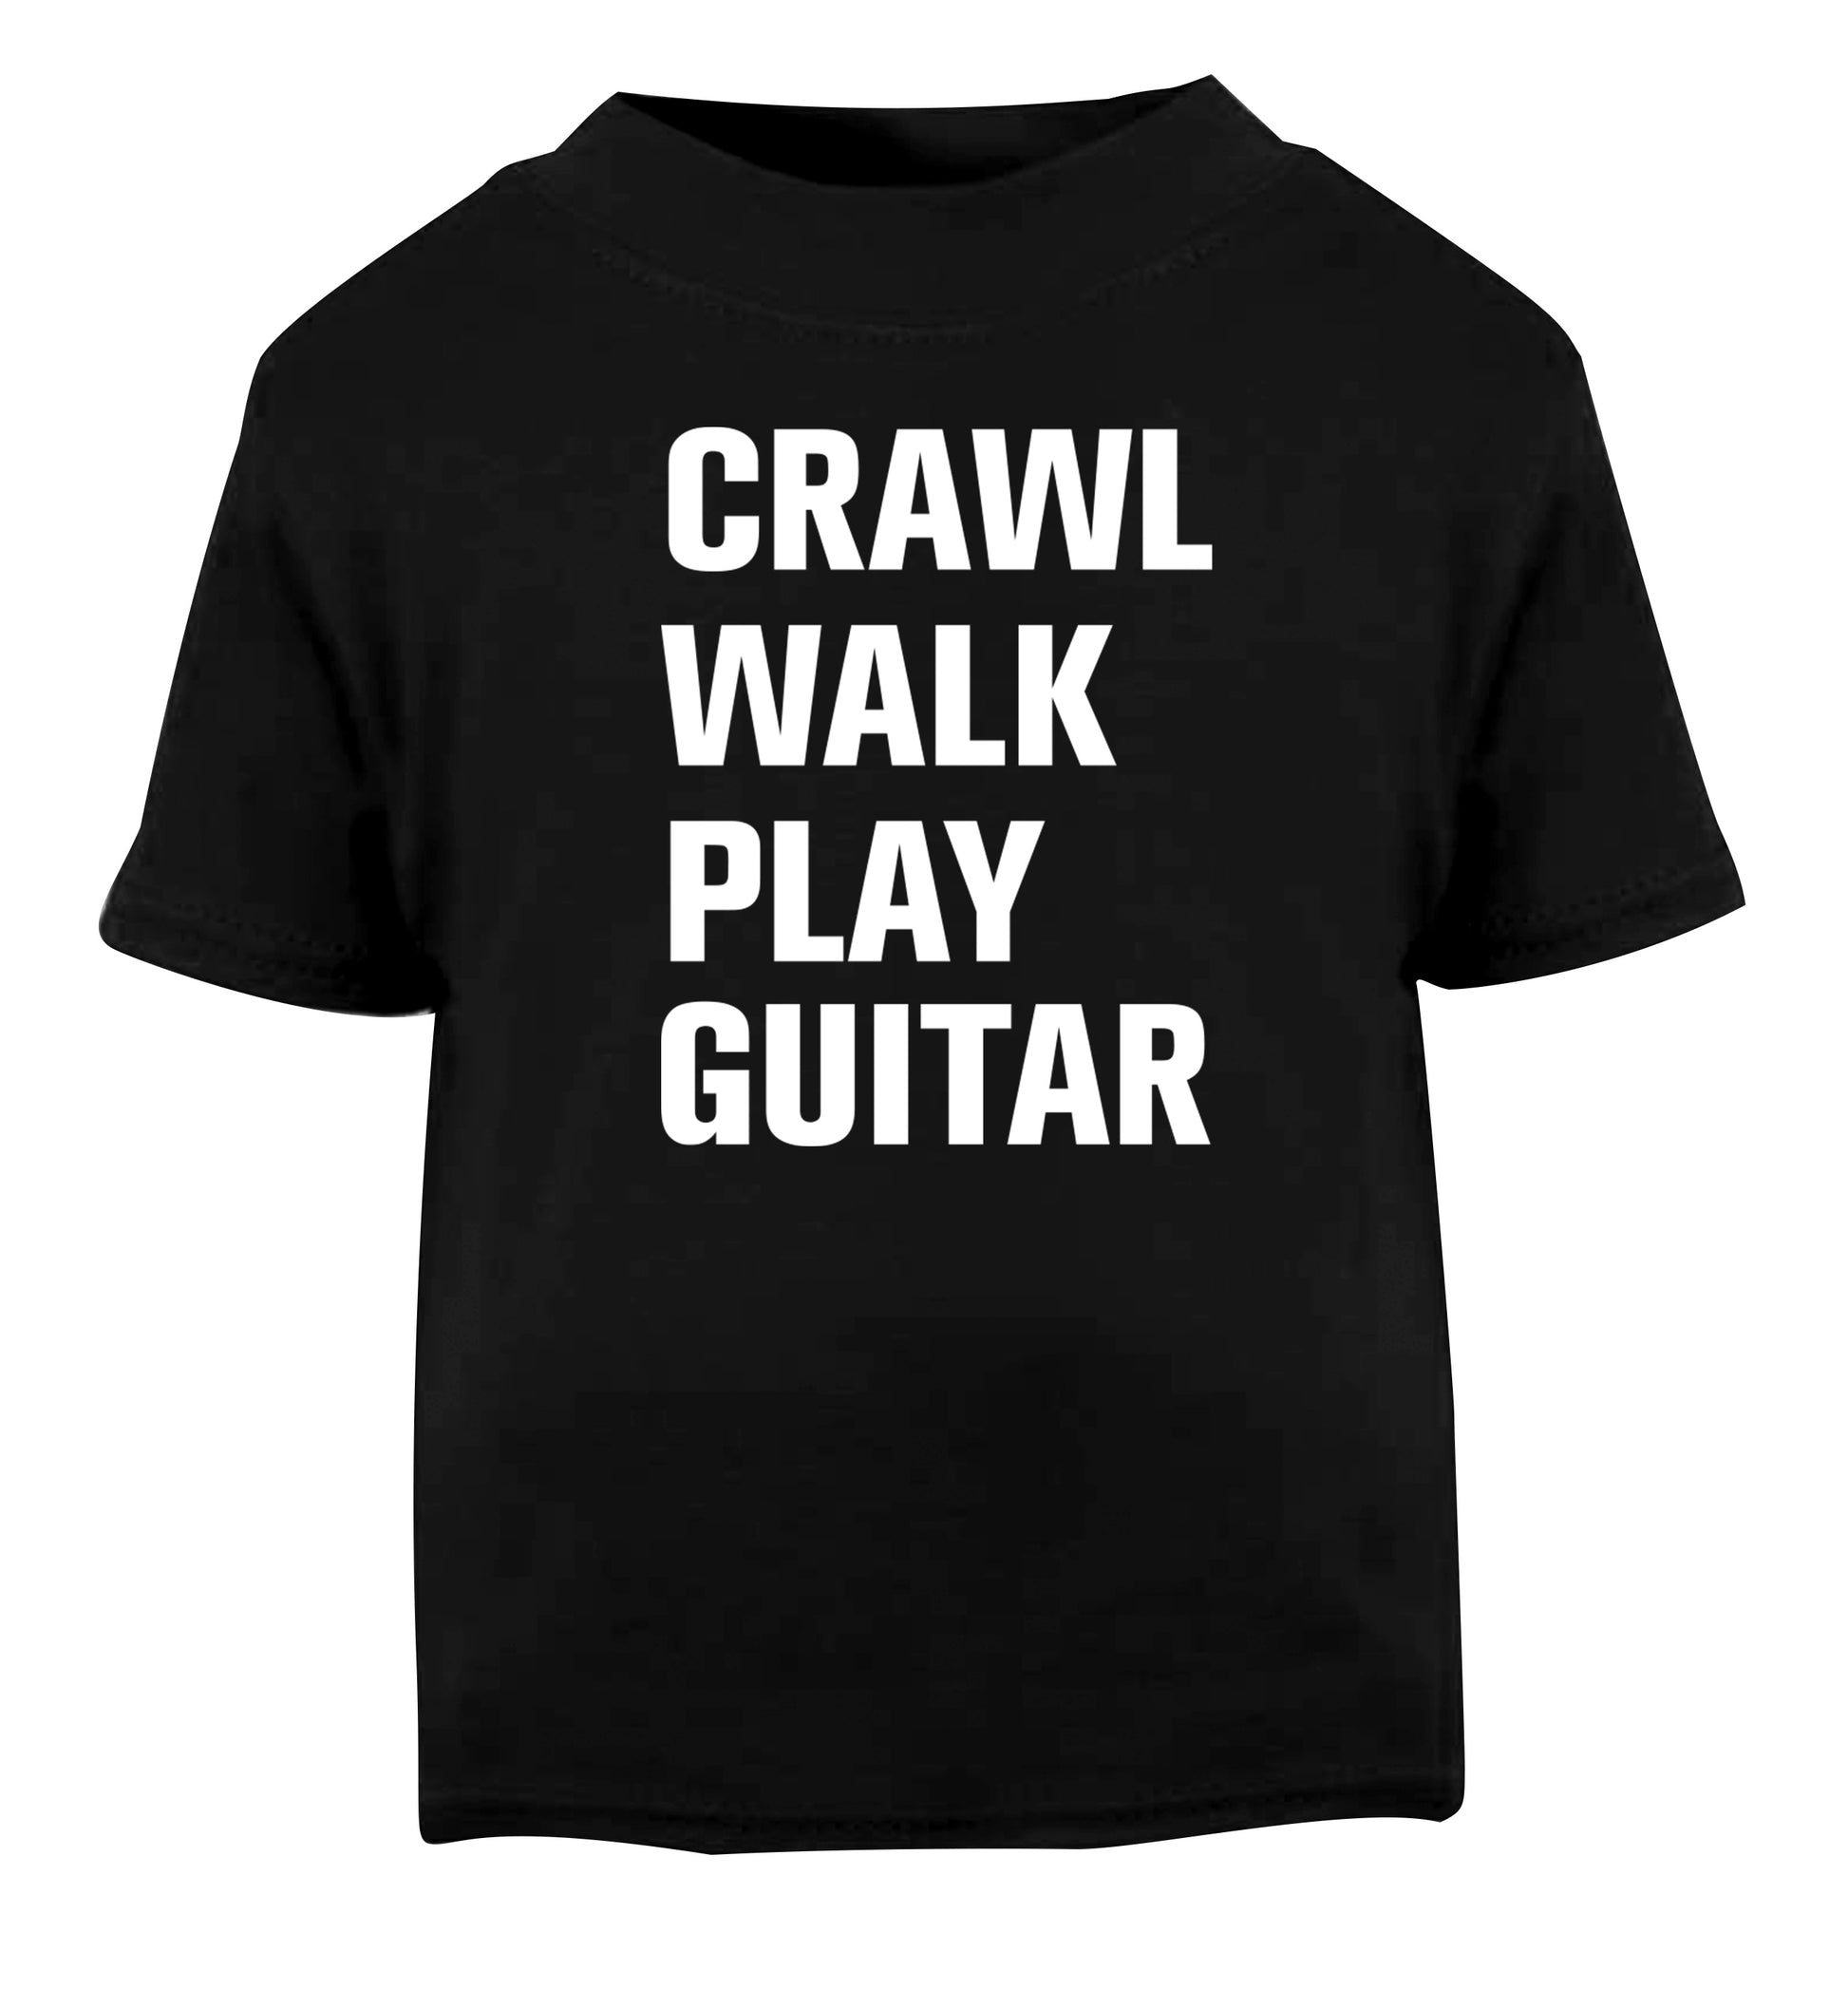 Crawl walk play guitar Black Baby Toddler Tshirt 2 years